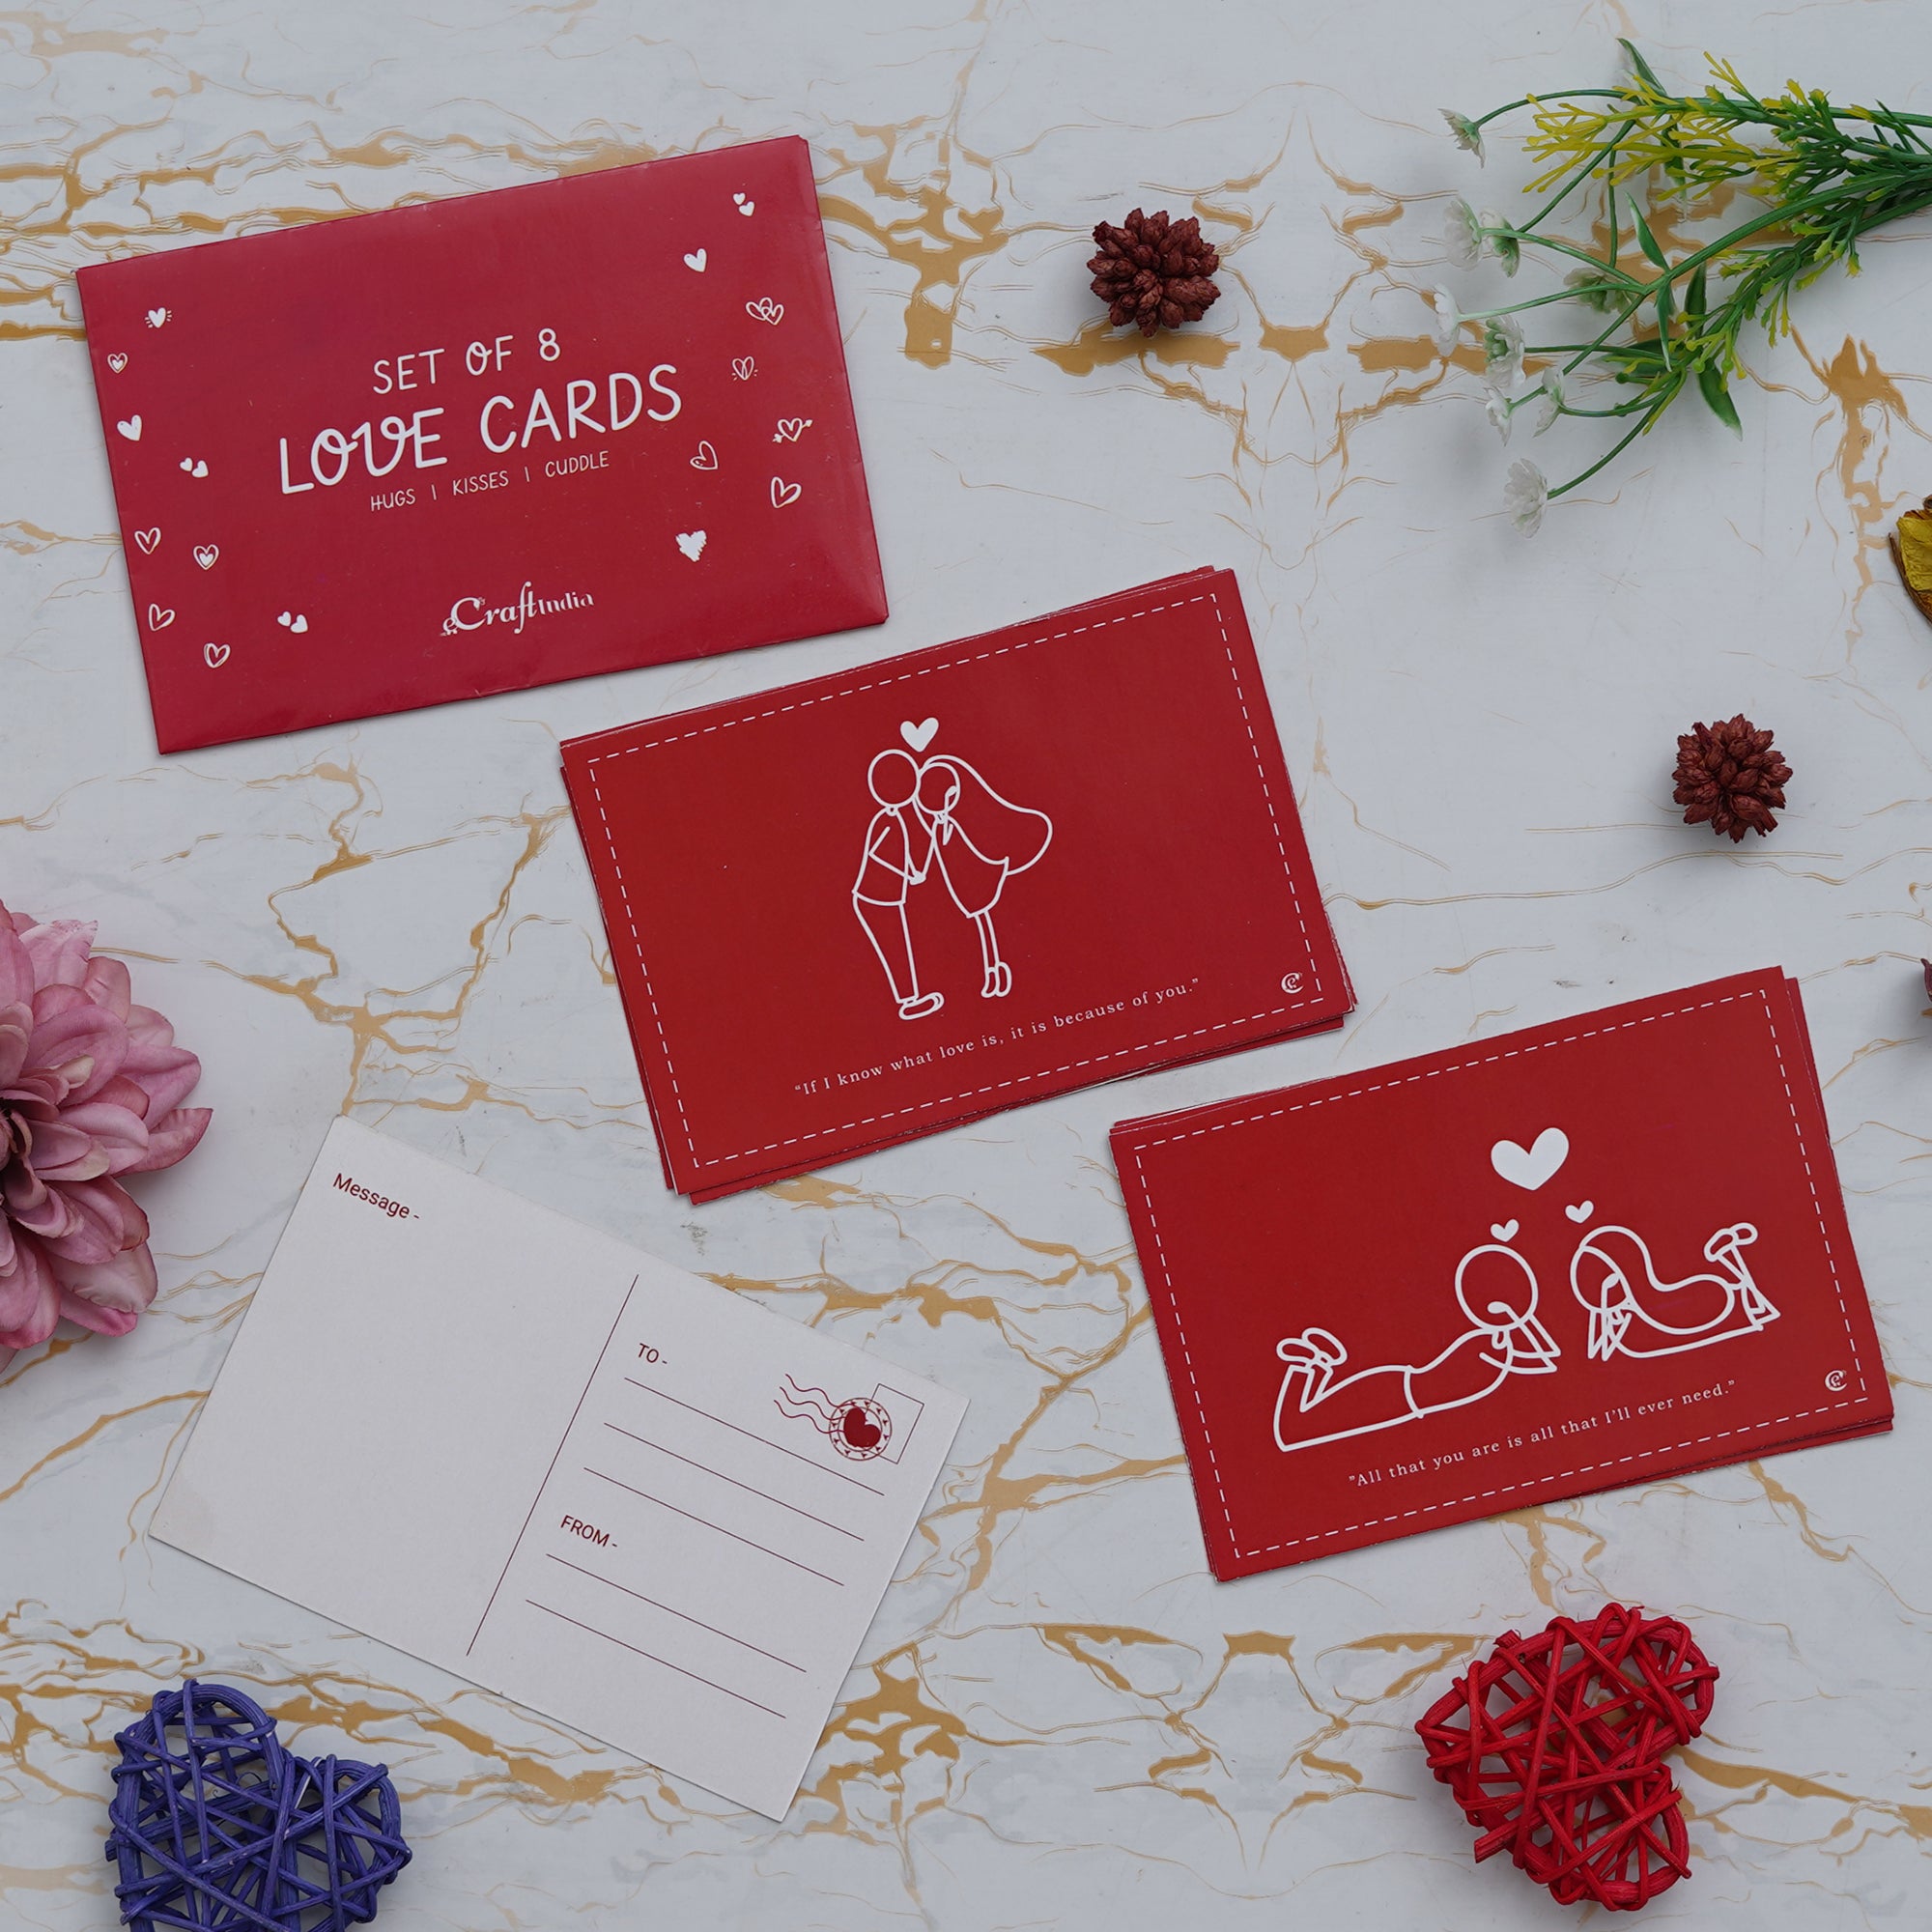 Valentine Combo of Pack of 8 Love Gift Cards, Golden Rose Gift Set, Wooden Box "For You" Message Bottle Set 1